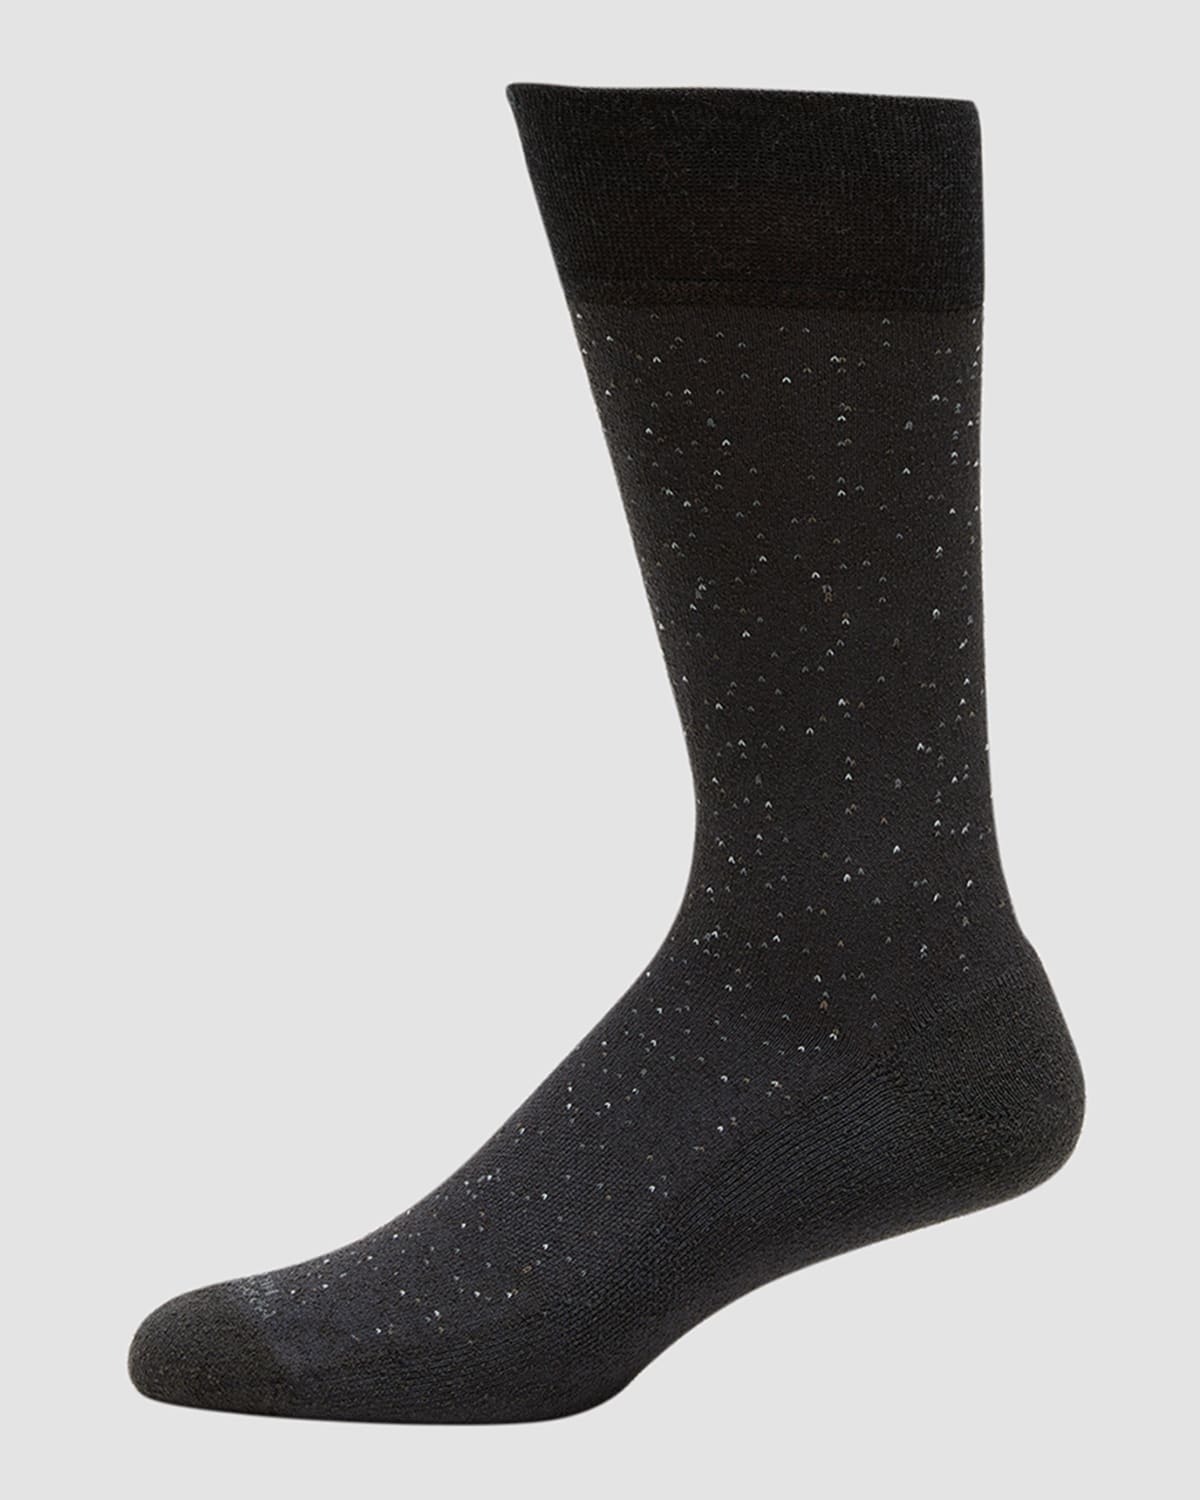 Men's Tweed Mid-Calf Socks